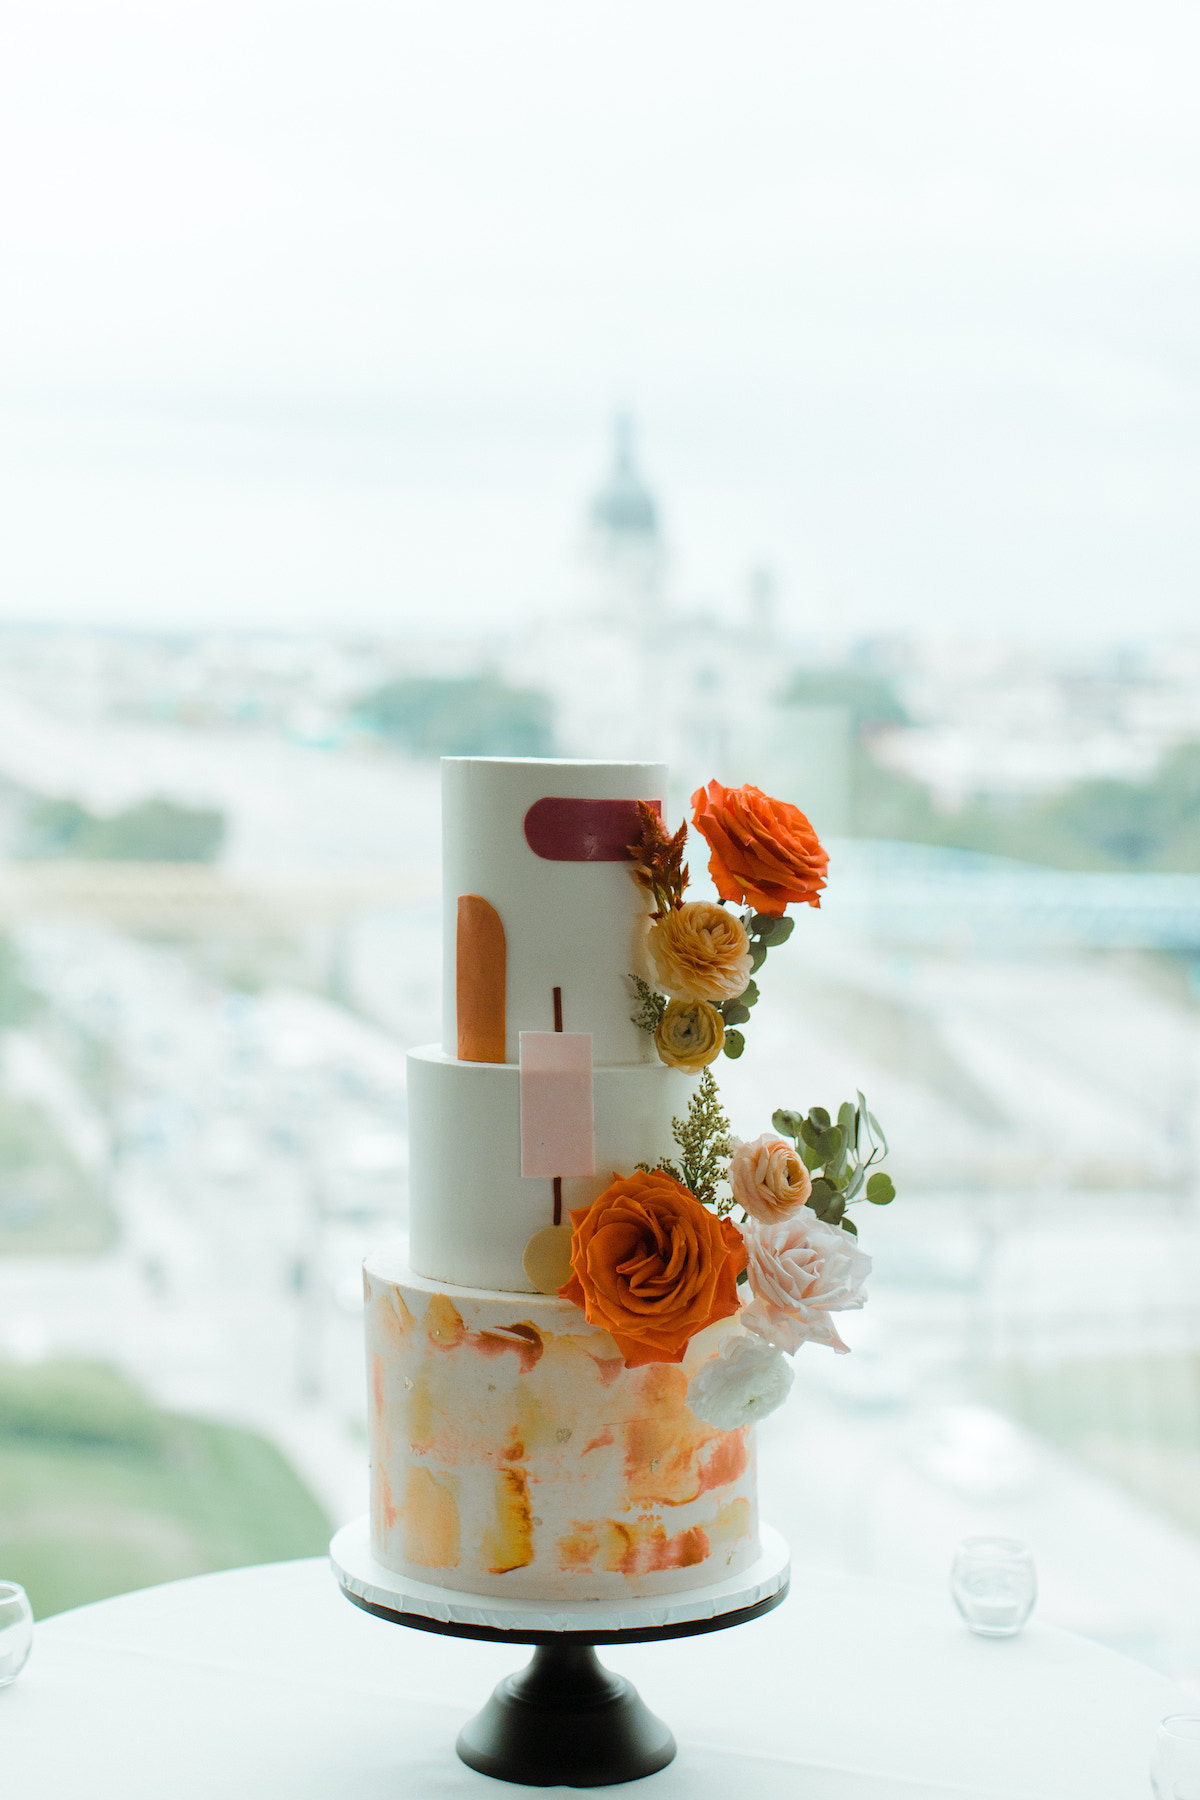 3-tier wedding cake with bright fresh flowers